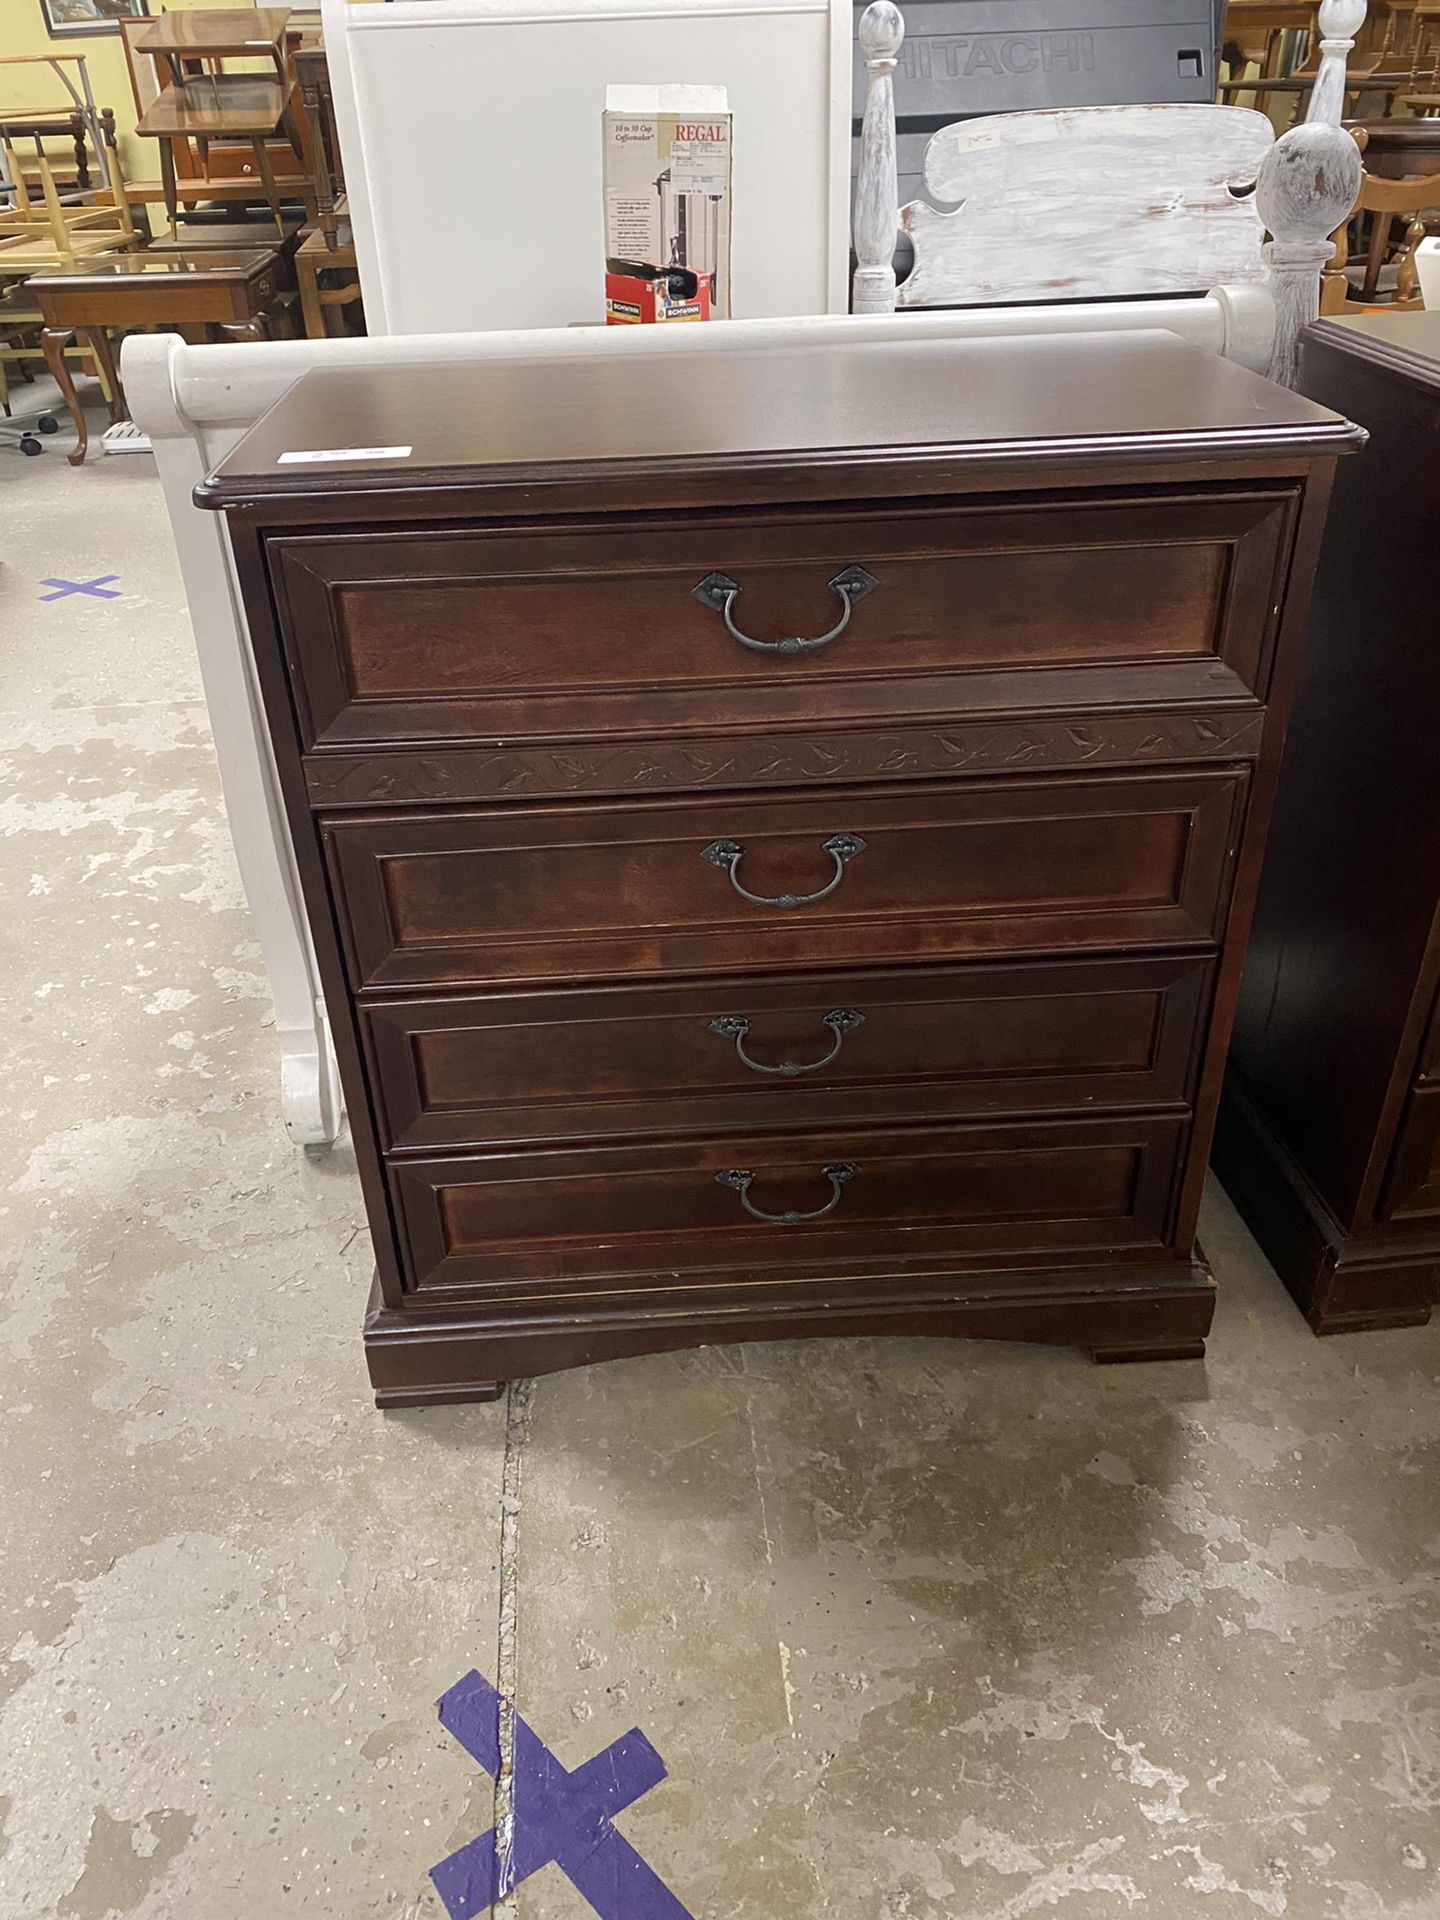 Mahogany chest of drawer $150